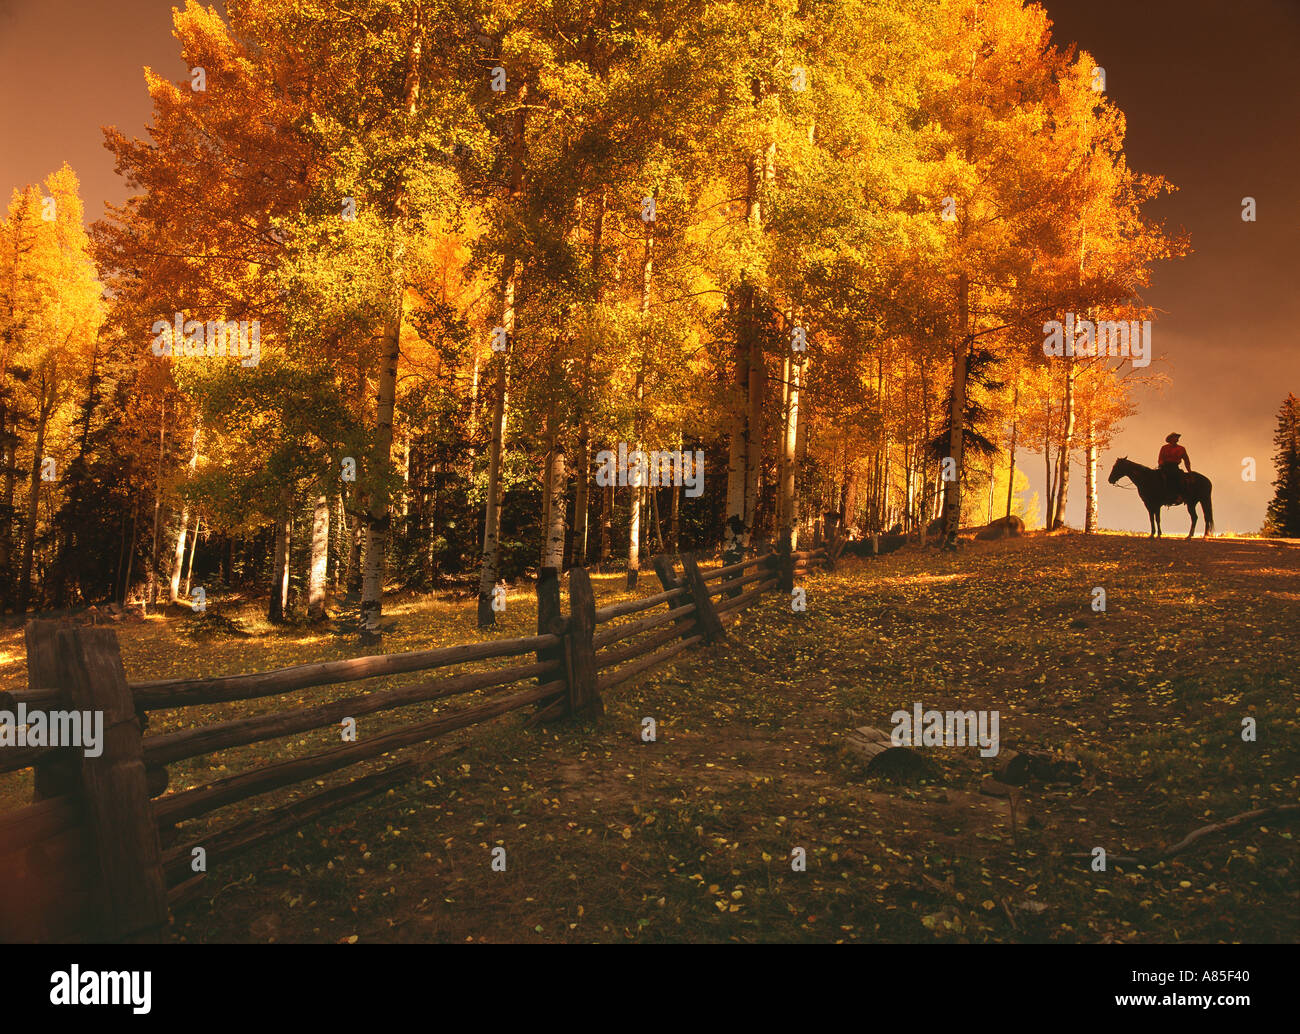 Cowboy riding horse in autumn trees Stock Photo